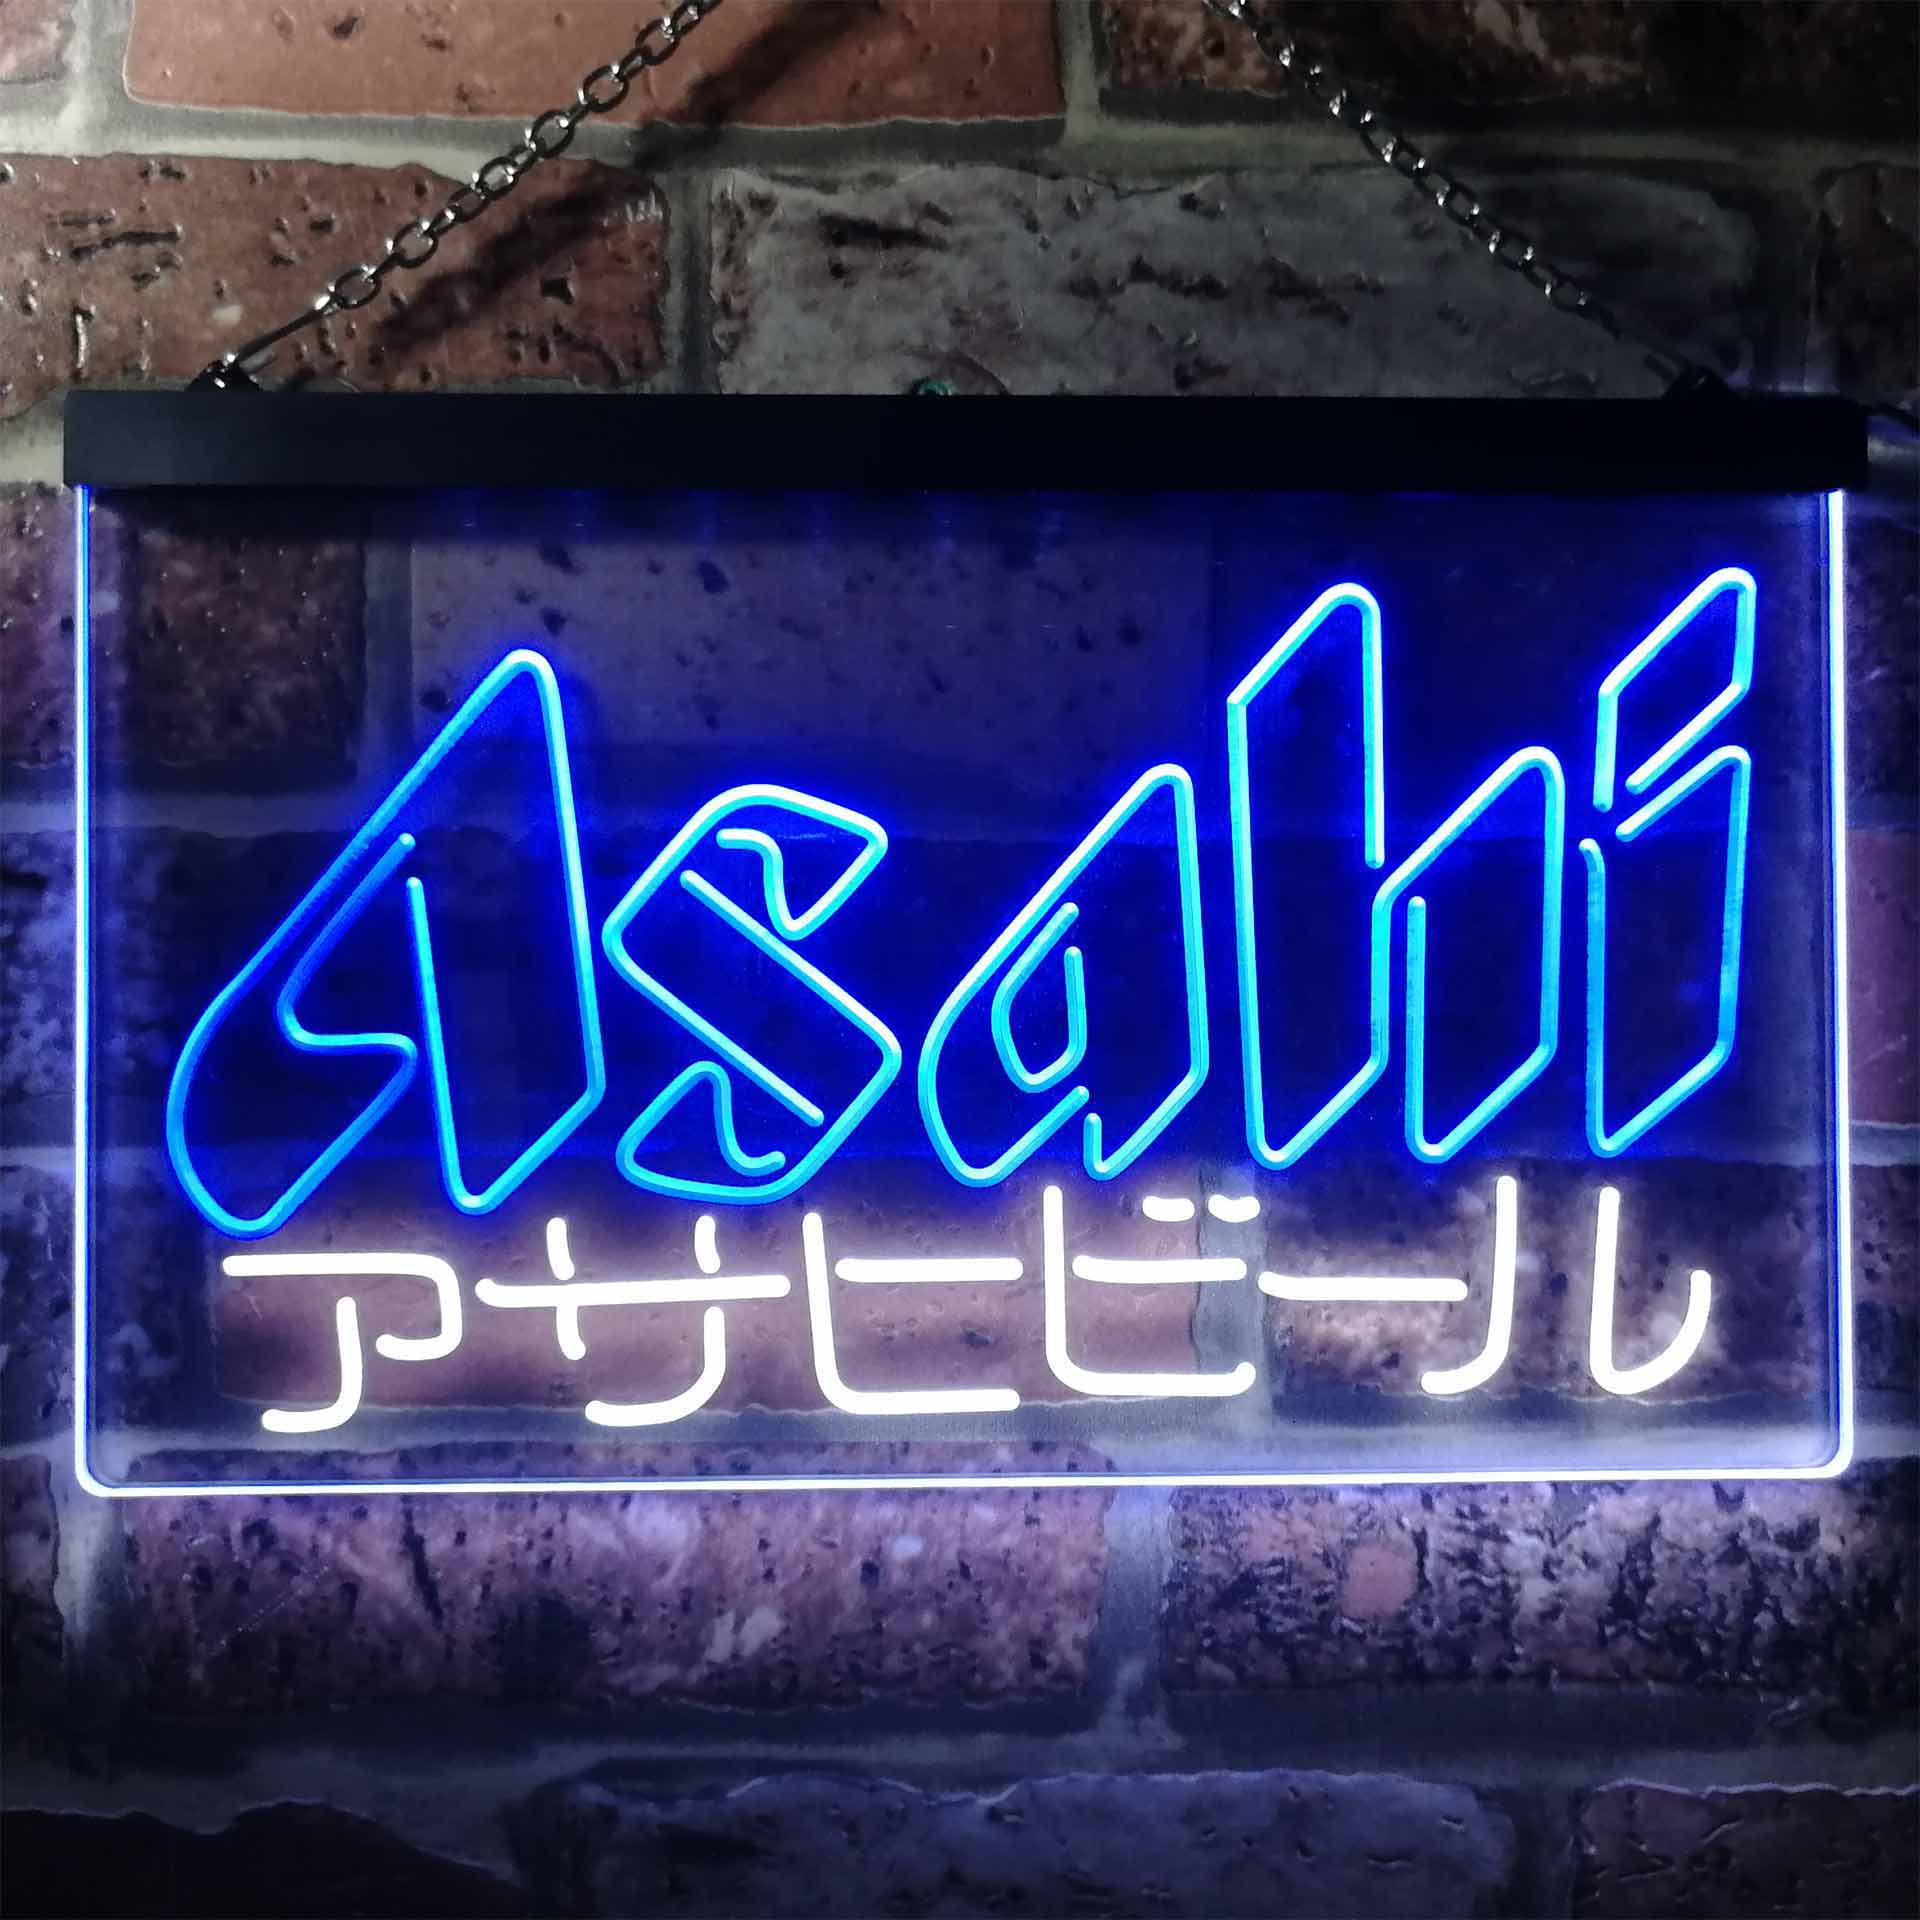 Asahi Japan Beer Bar Neon LED Sign